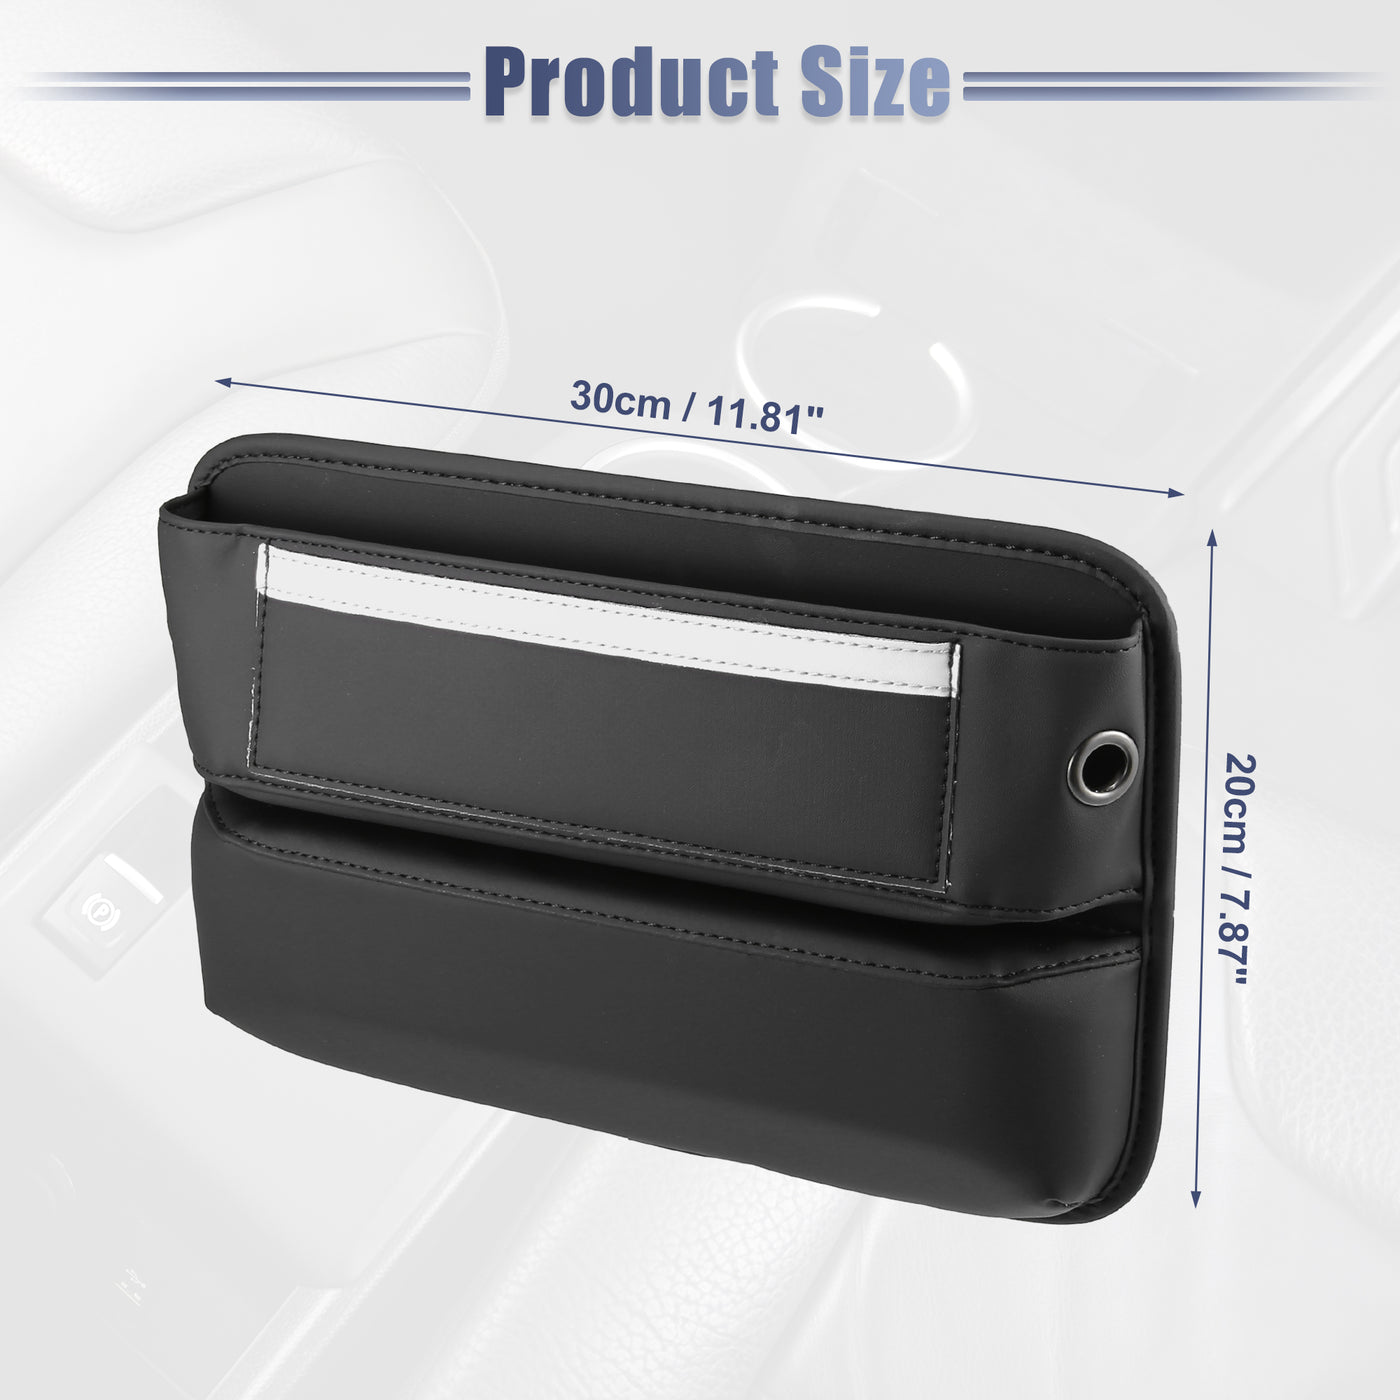 ACROPIX PU Leather Car Seat Gap Filler Multiple Pockets Car Seat Organizer Console Side Pocket Storage Box - Pack of 2